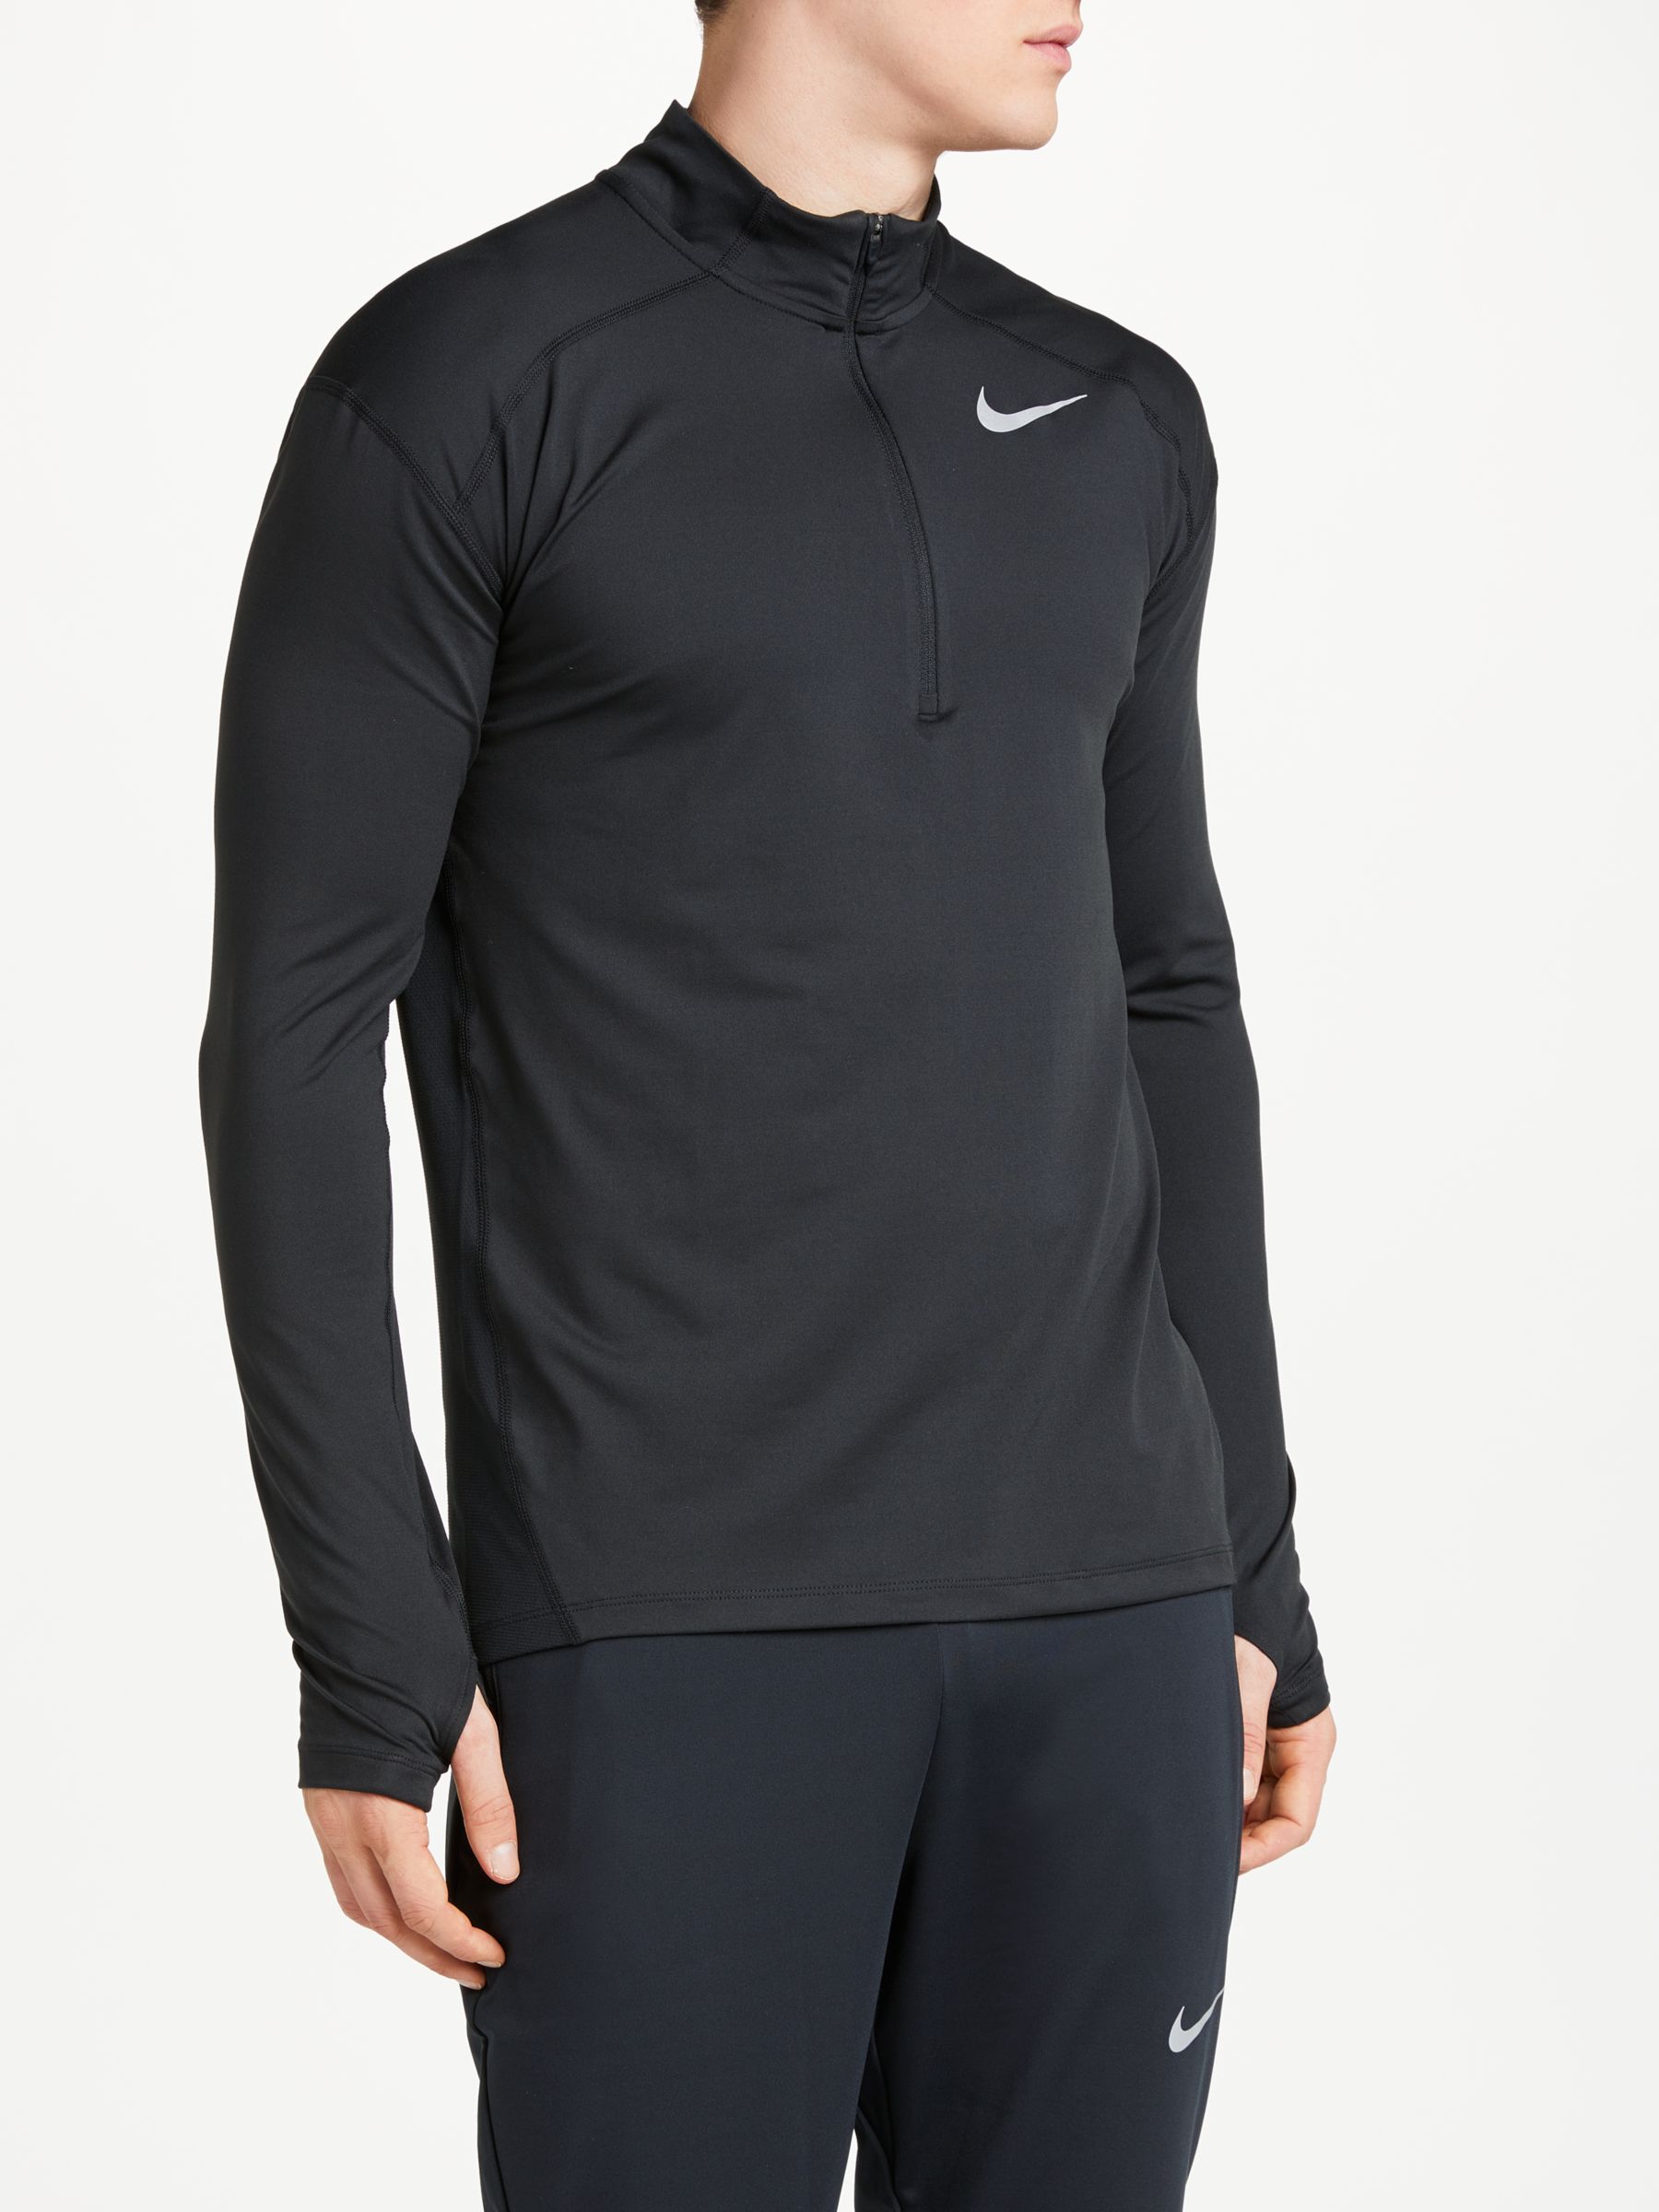 Nike Dry Element Long Sleeve 1/2 Zip Running Top, Black at John Lewis ...